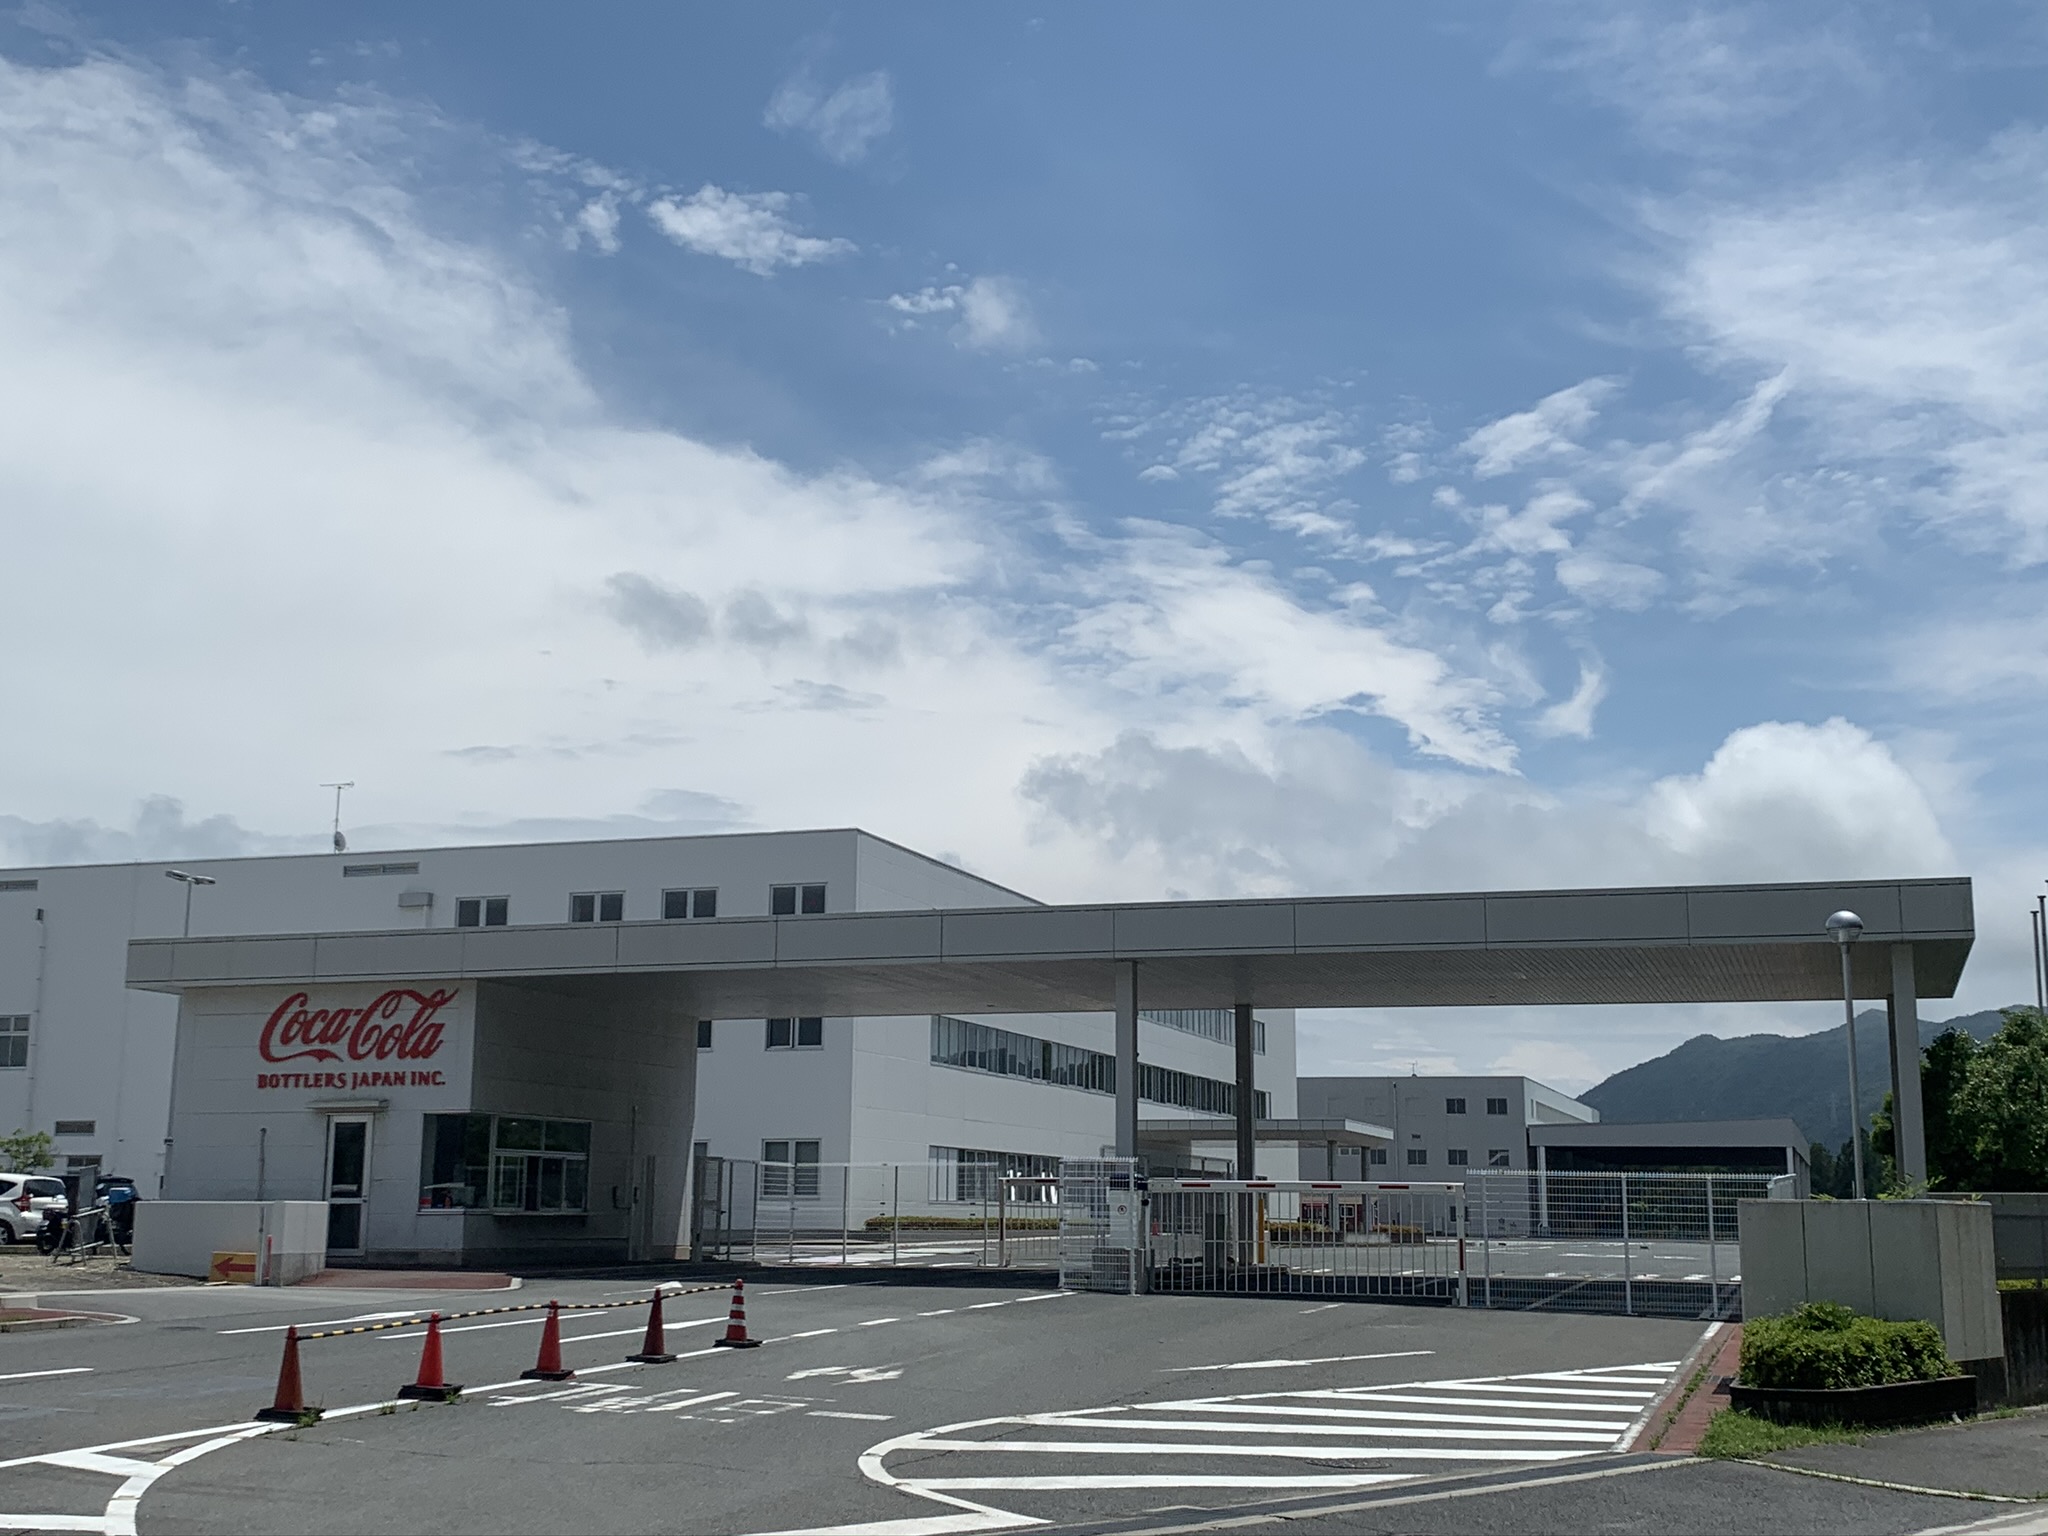 News | Coca-Cola Bottlers Japan Inc.